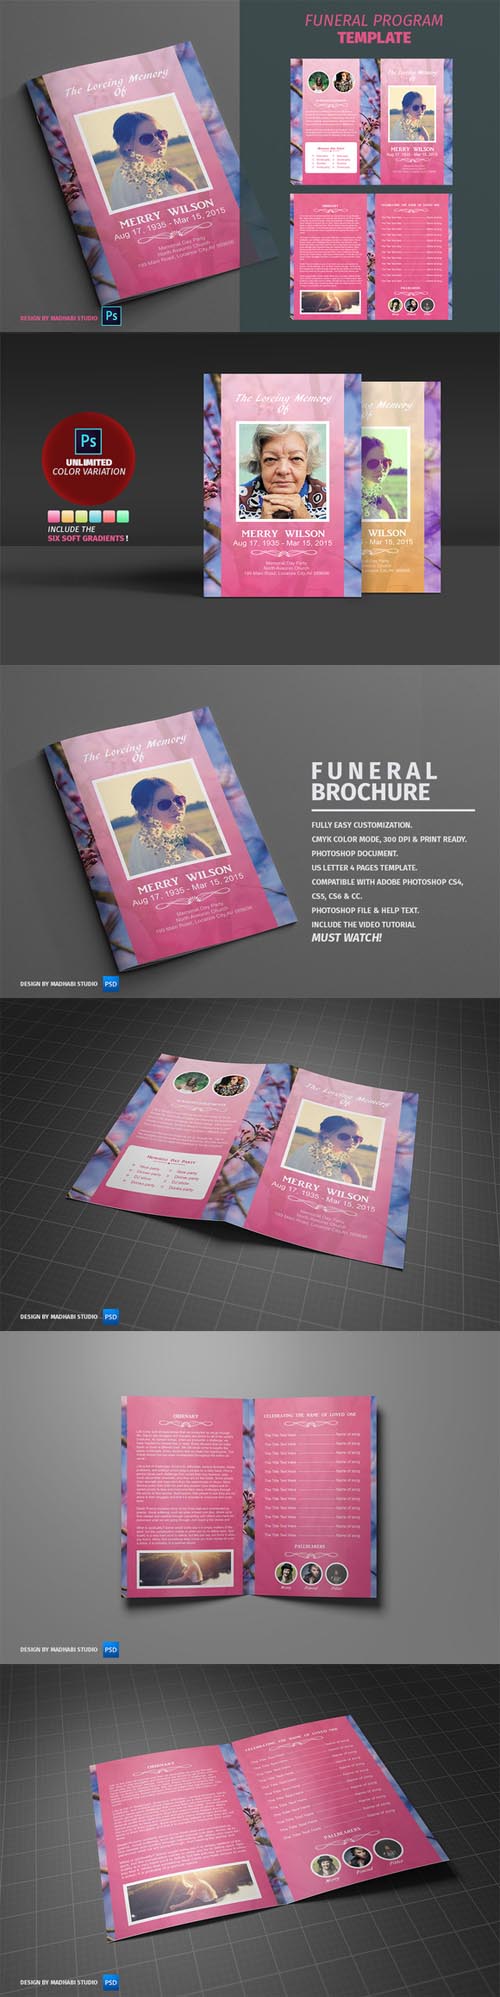 Funeral Program Template vol01